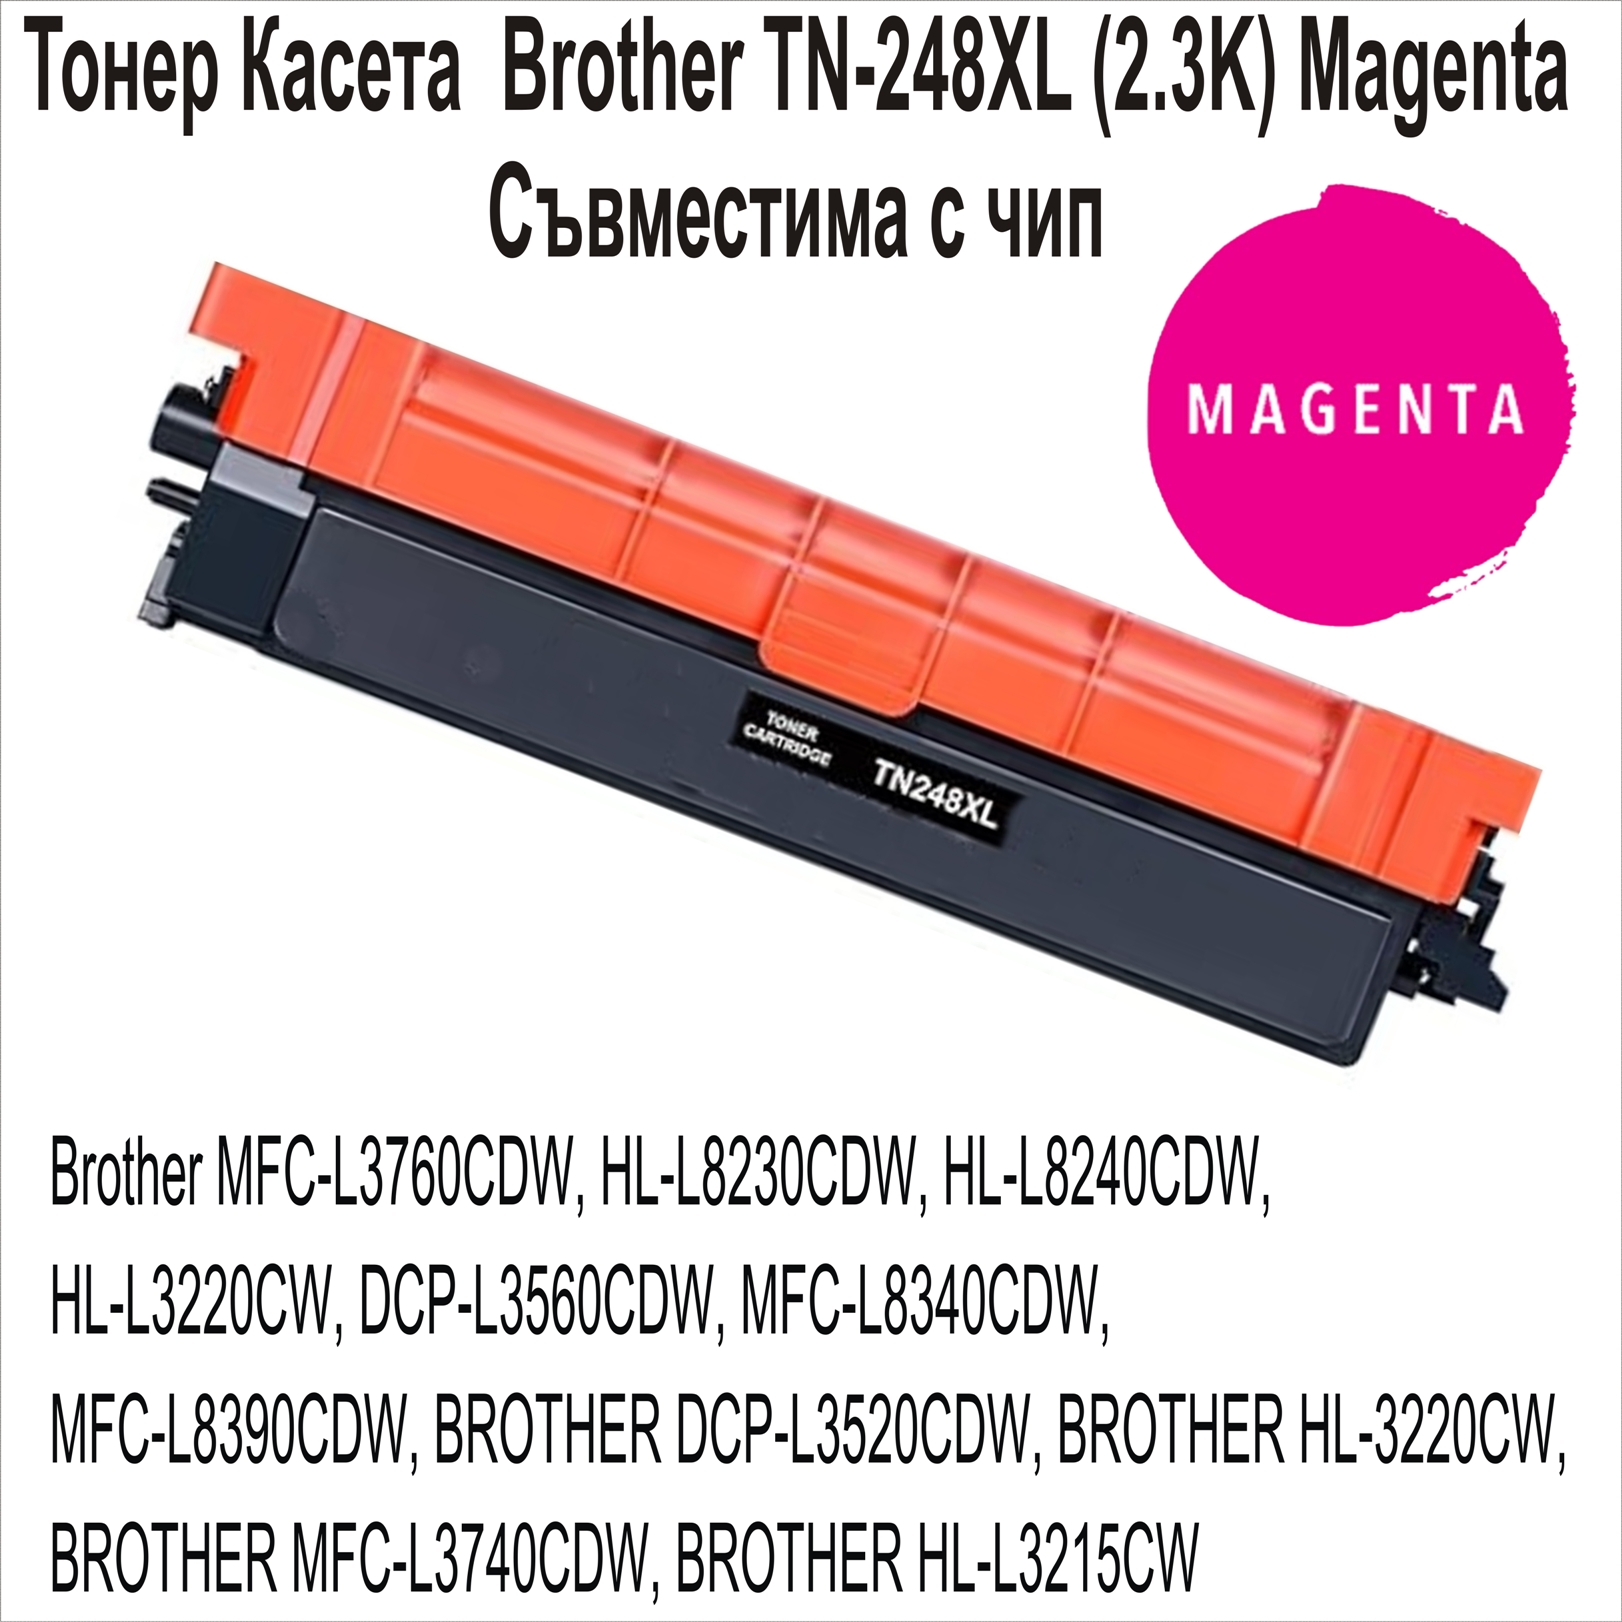 Brother TN-248XL (2.3K) Magenta Compatible